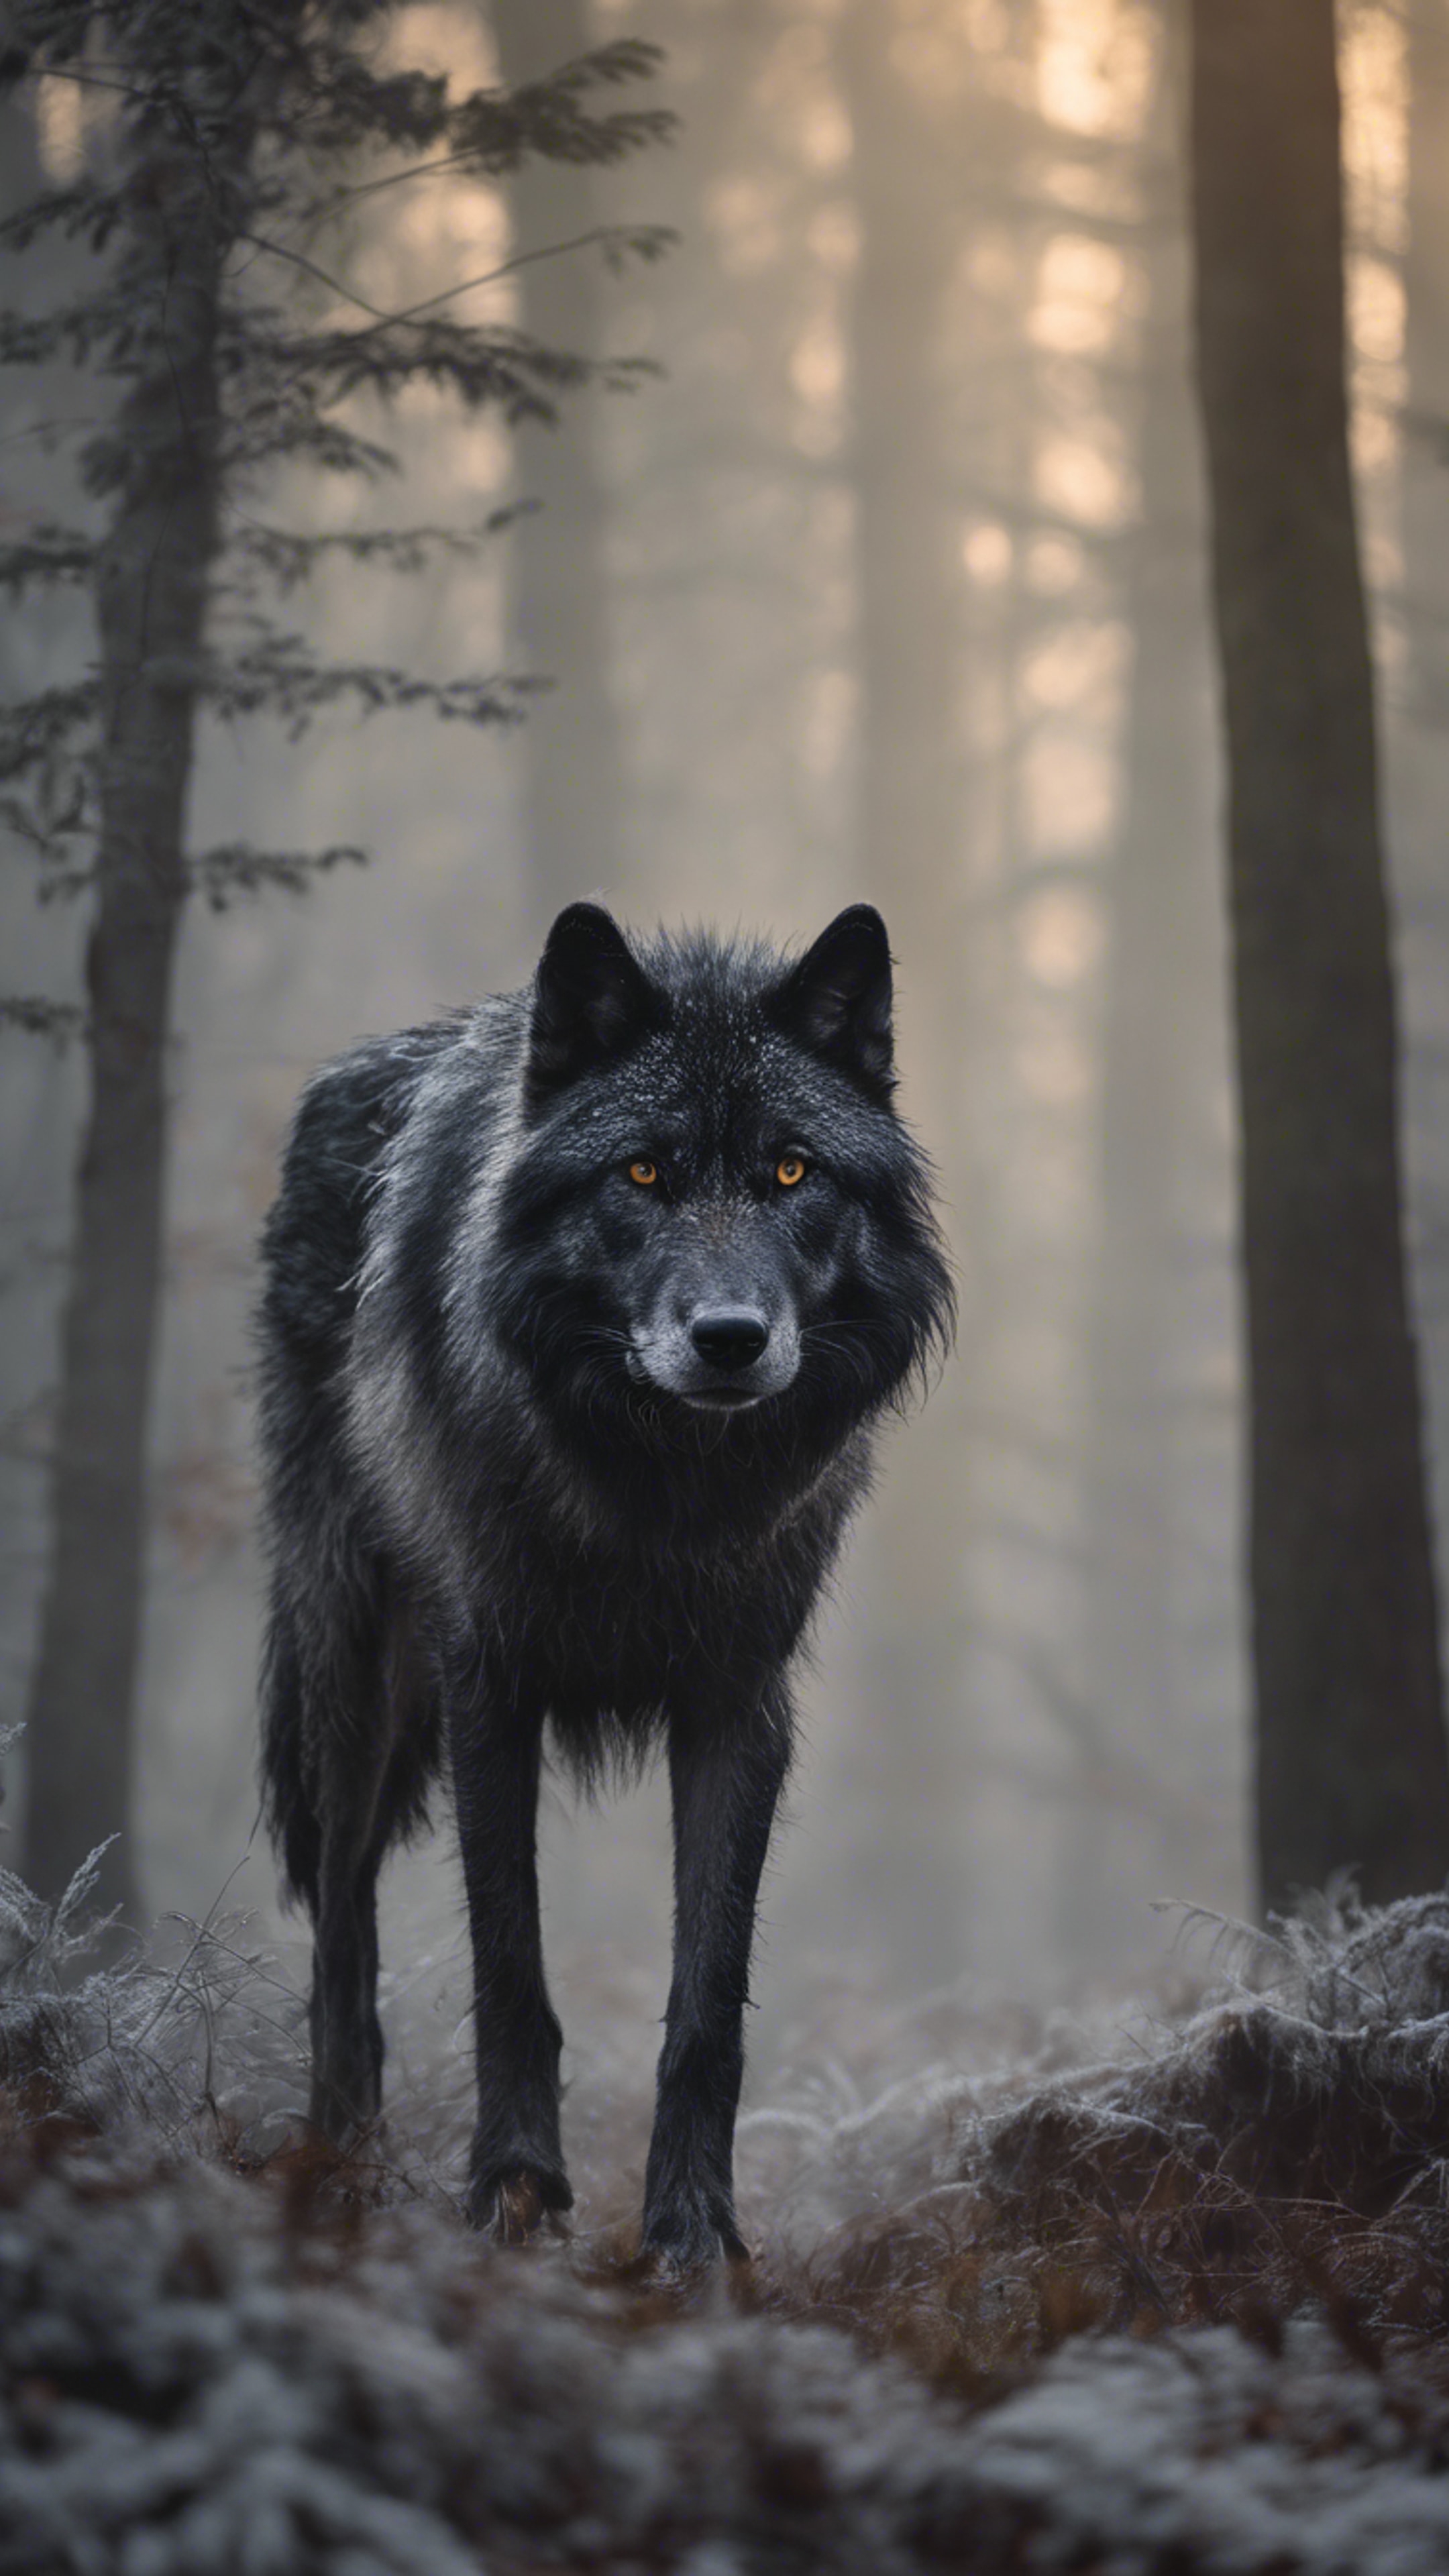 A cool black and gray shaggy wolf prowling through a mist-filled forest at dawn. Hintergrund[e0adfa1209b347ac9a7e]